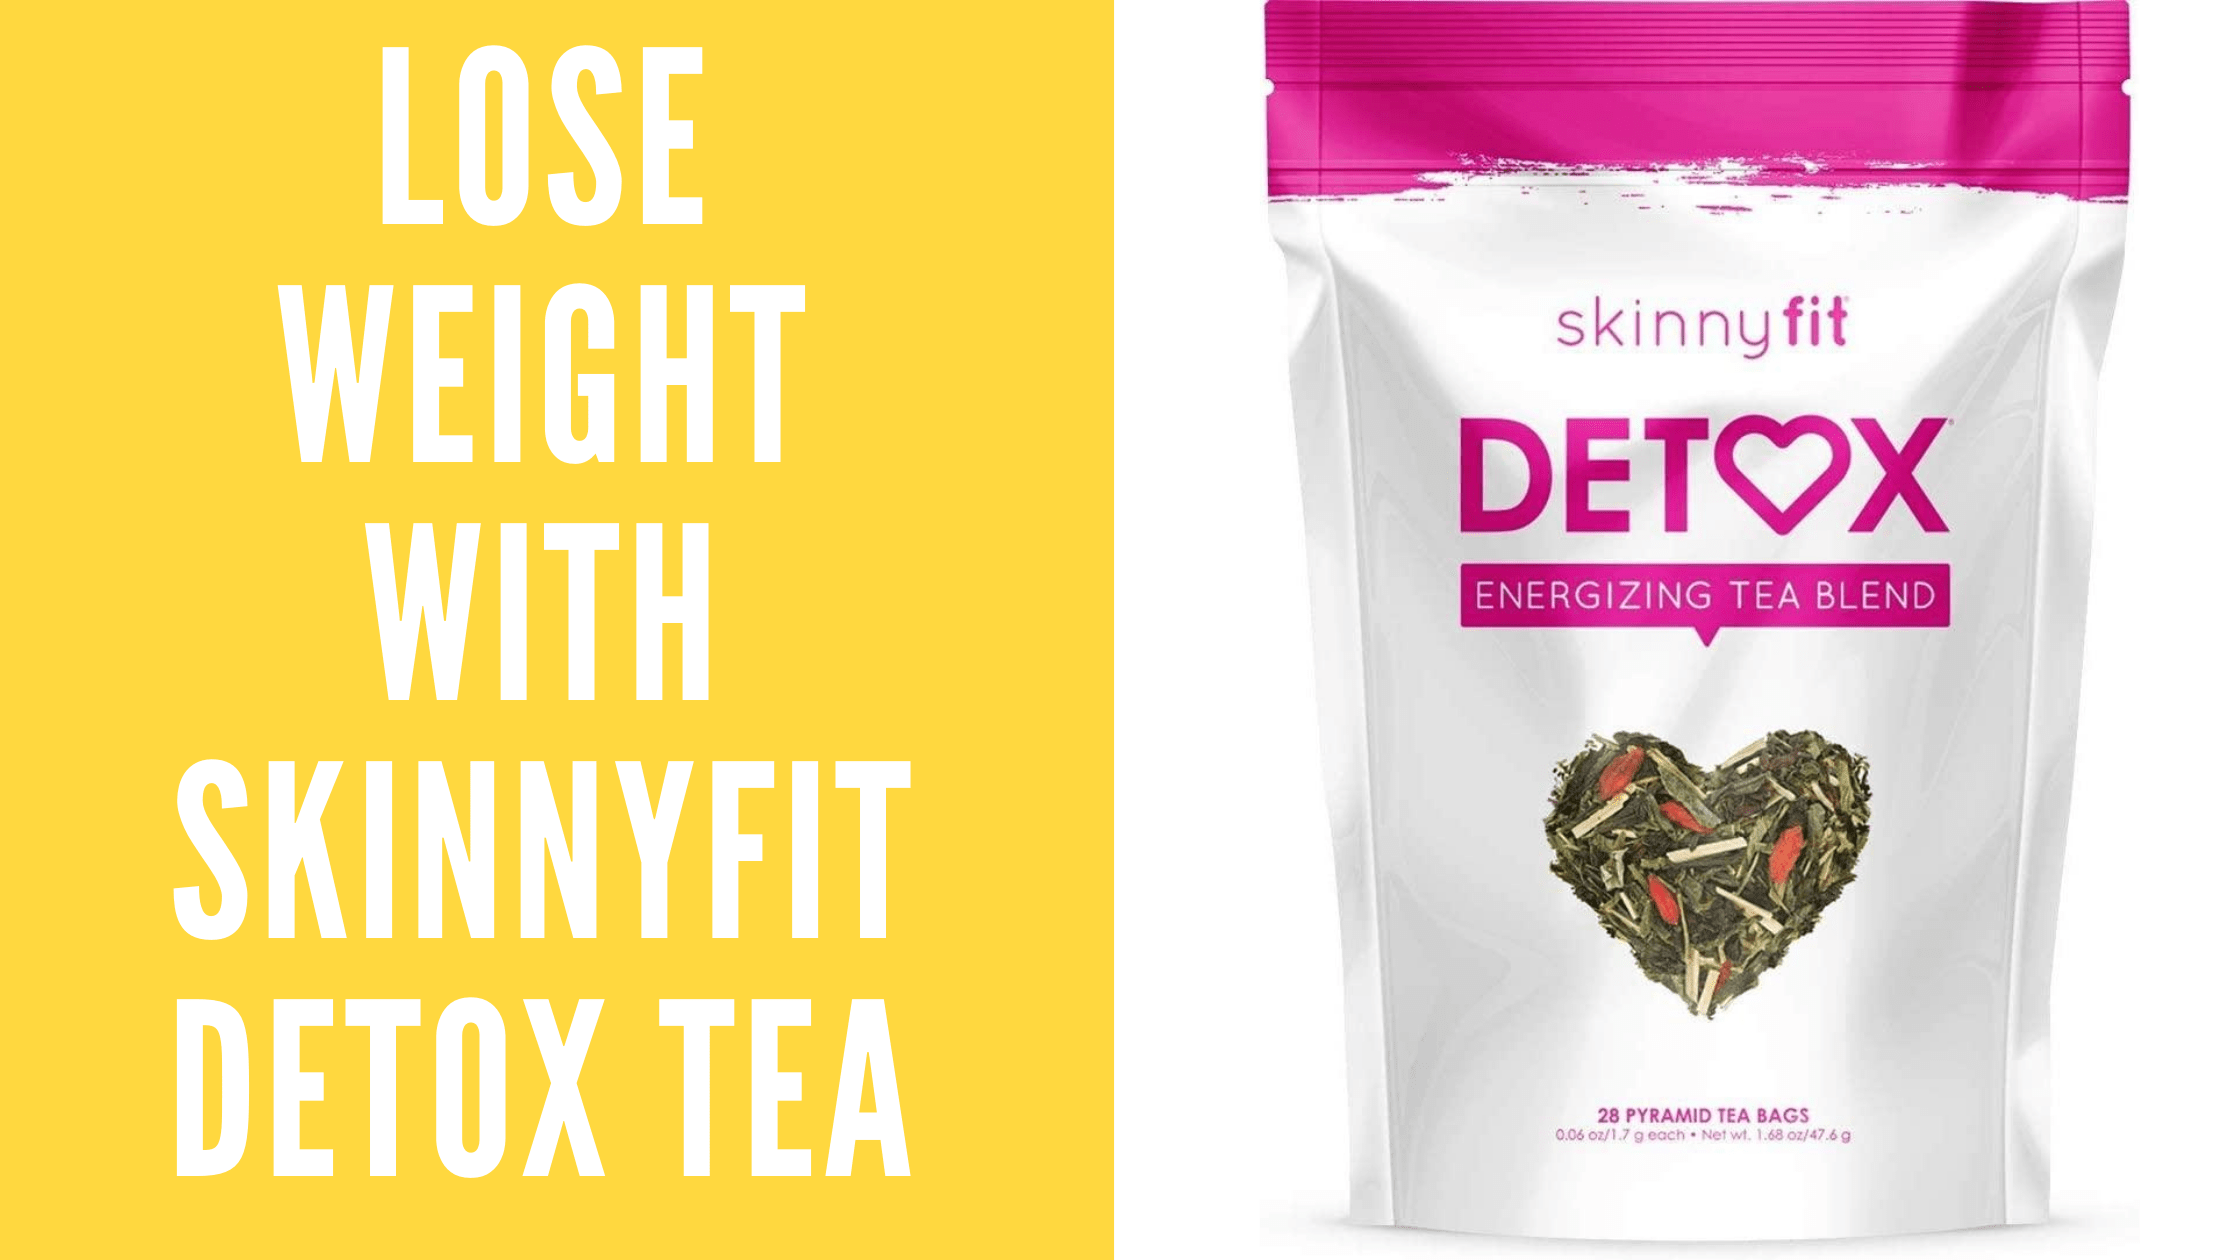 Lose Weight With SkinnyFit detox tea